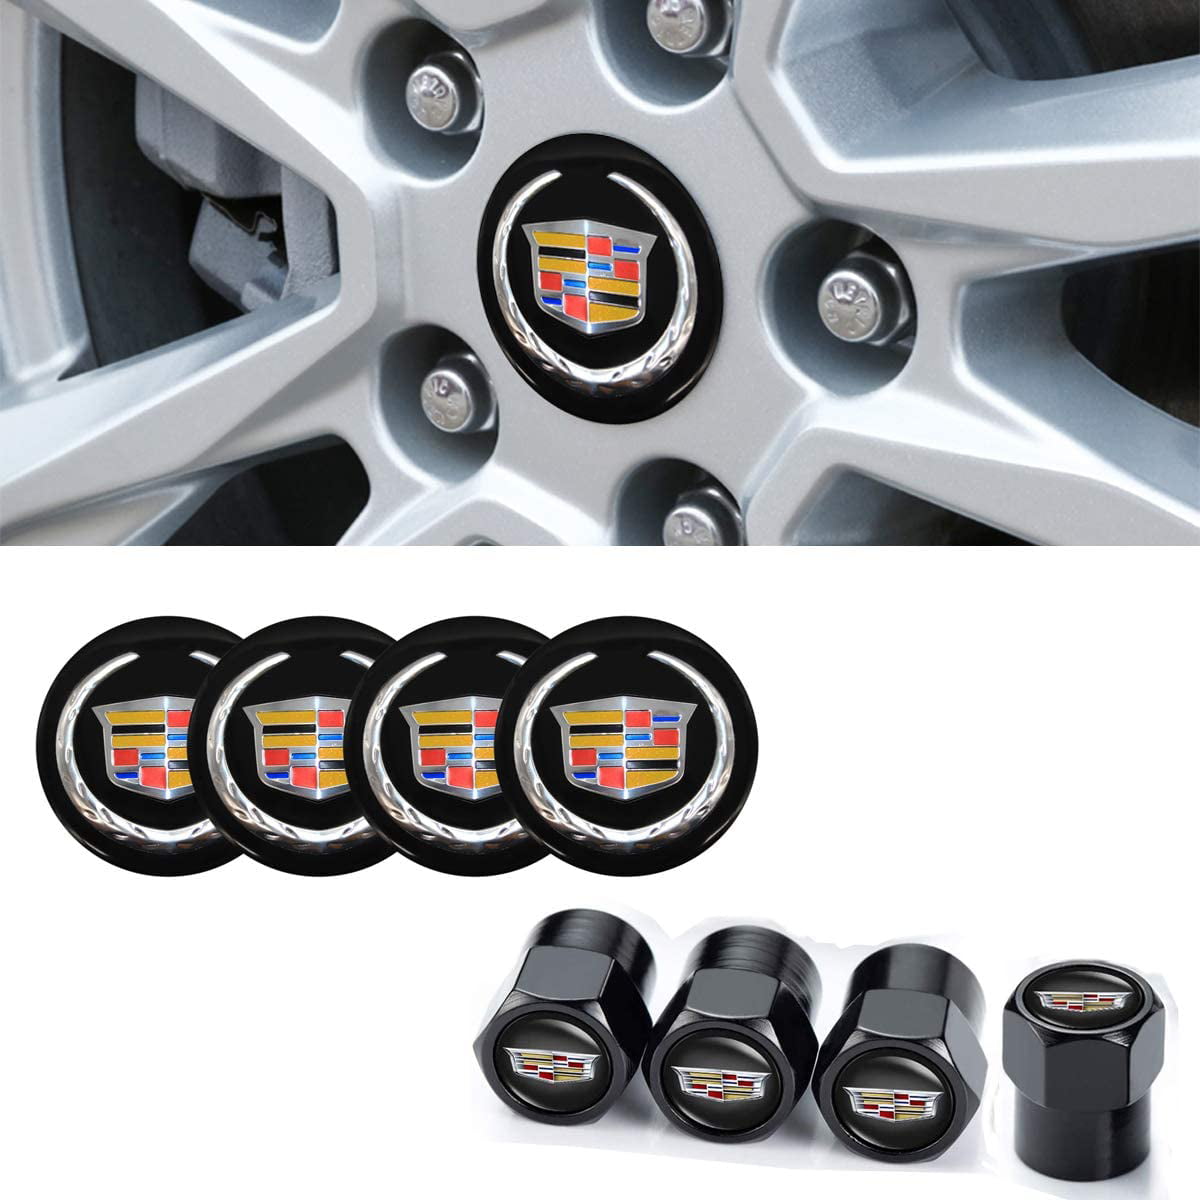 4x Universal Car Auto Wheel Tire Air Valve Cap Cover Decoration For Cadillac 